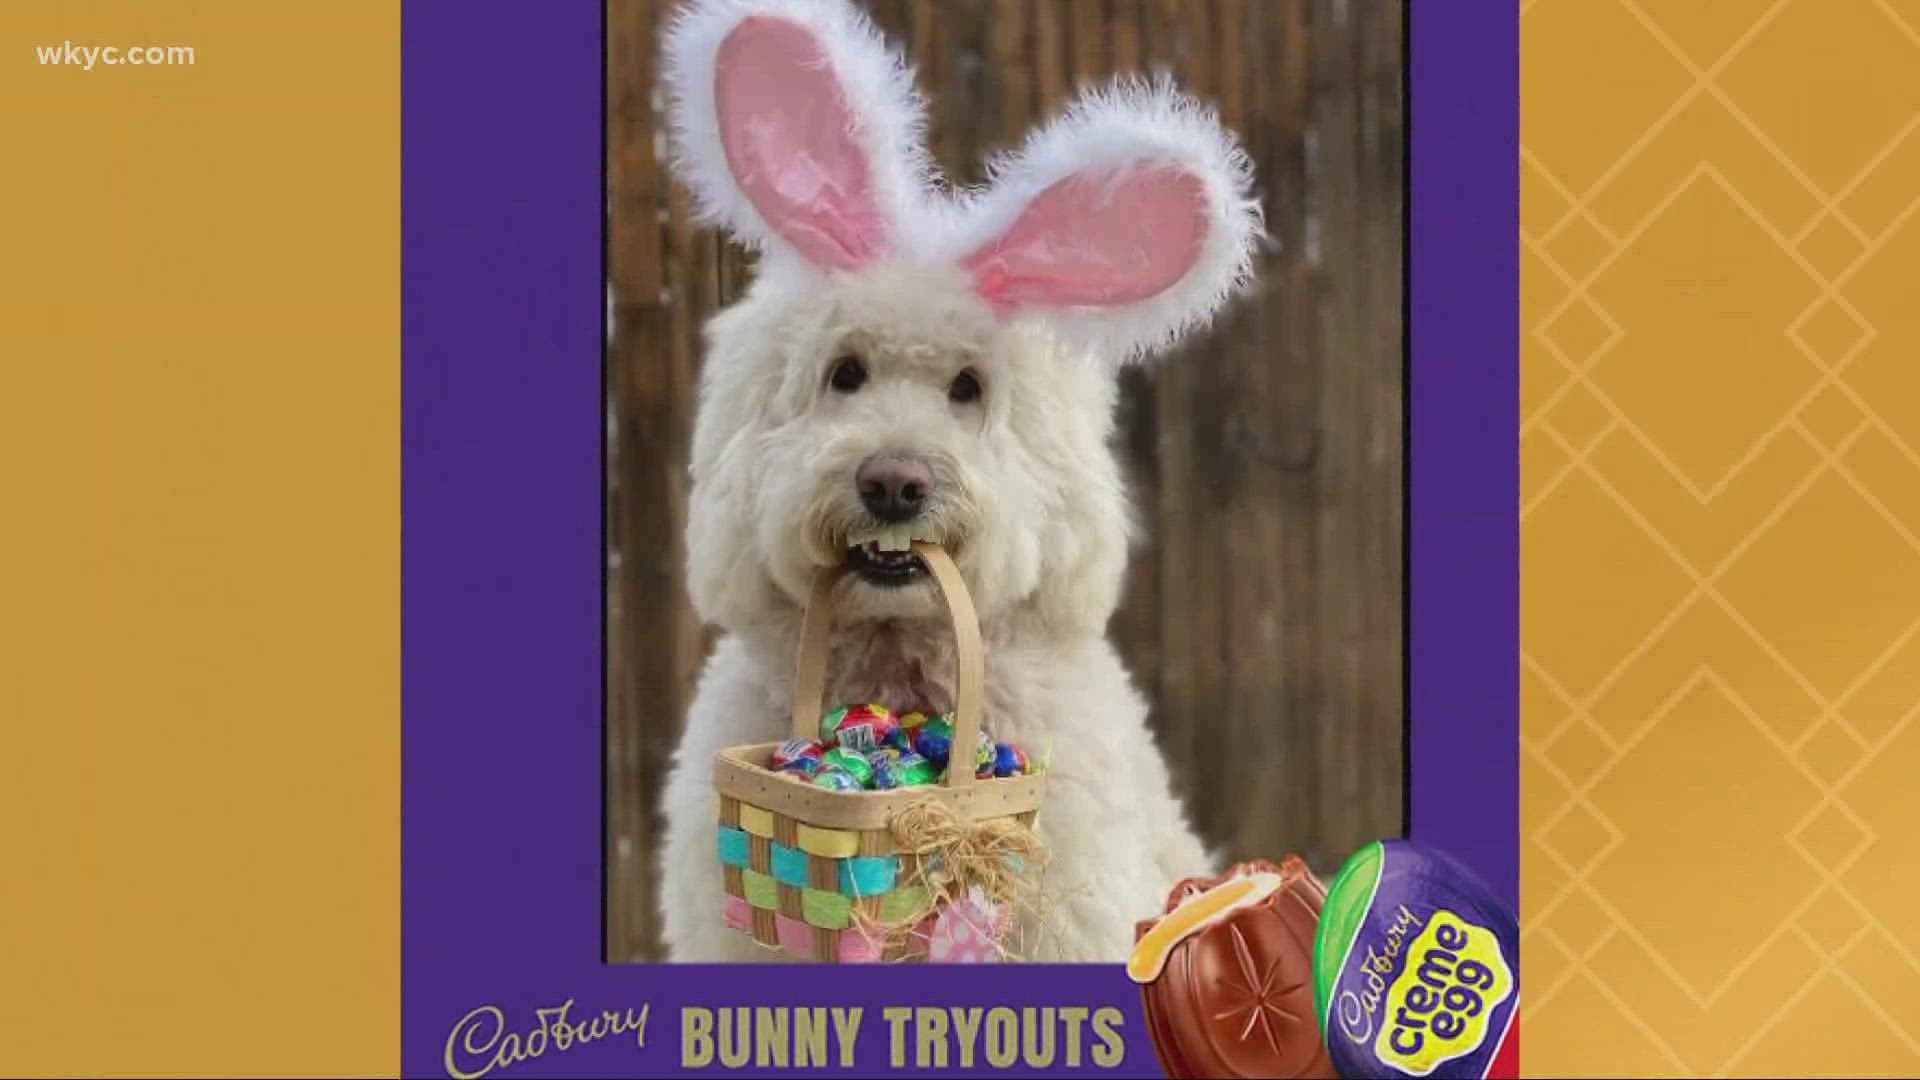 Ohio therapy dog Annie Rose wins 2022 Cadbury Bunny contest 